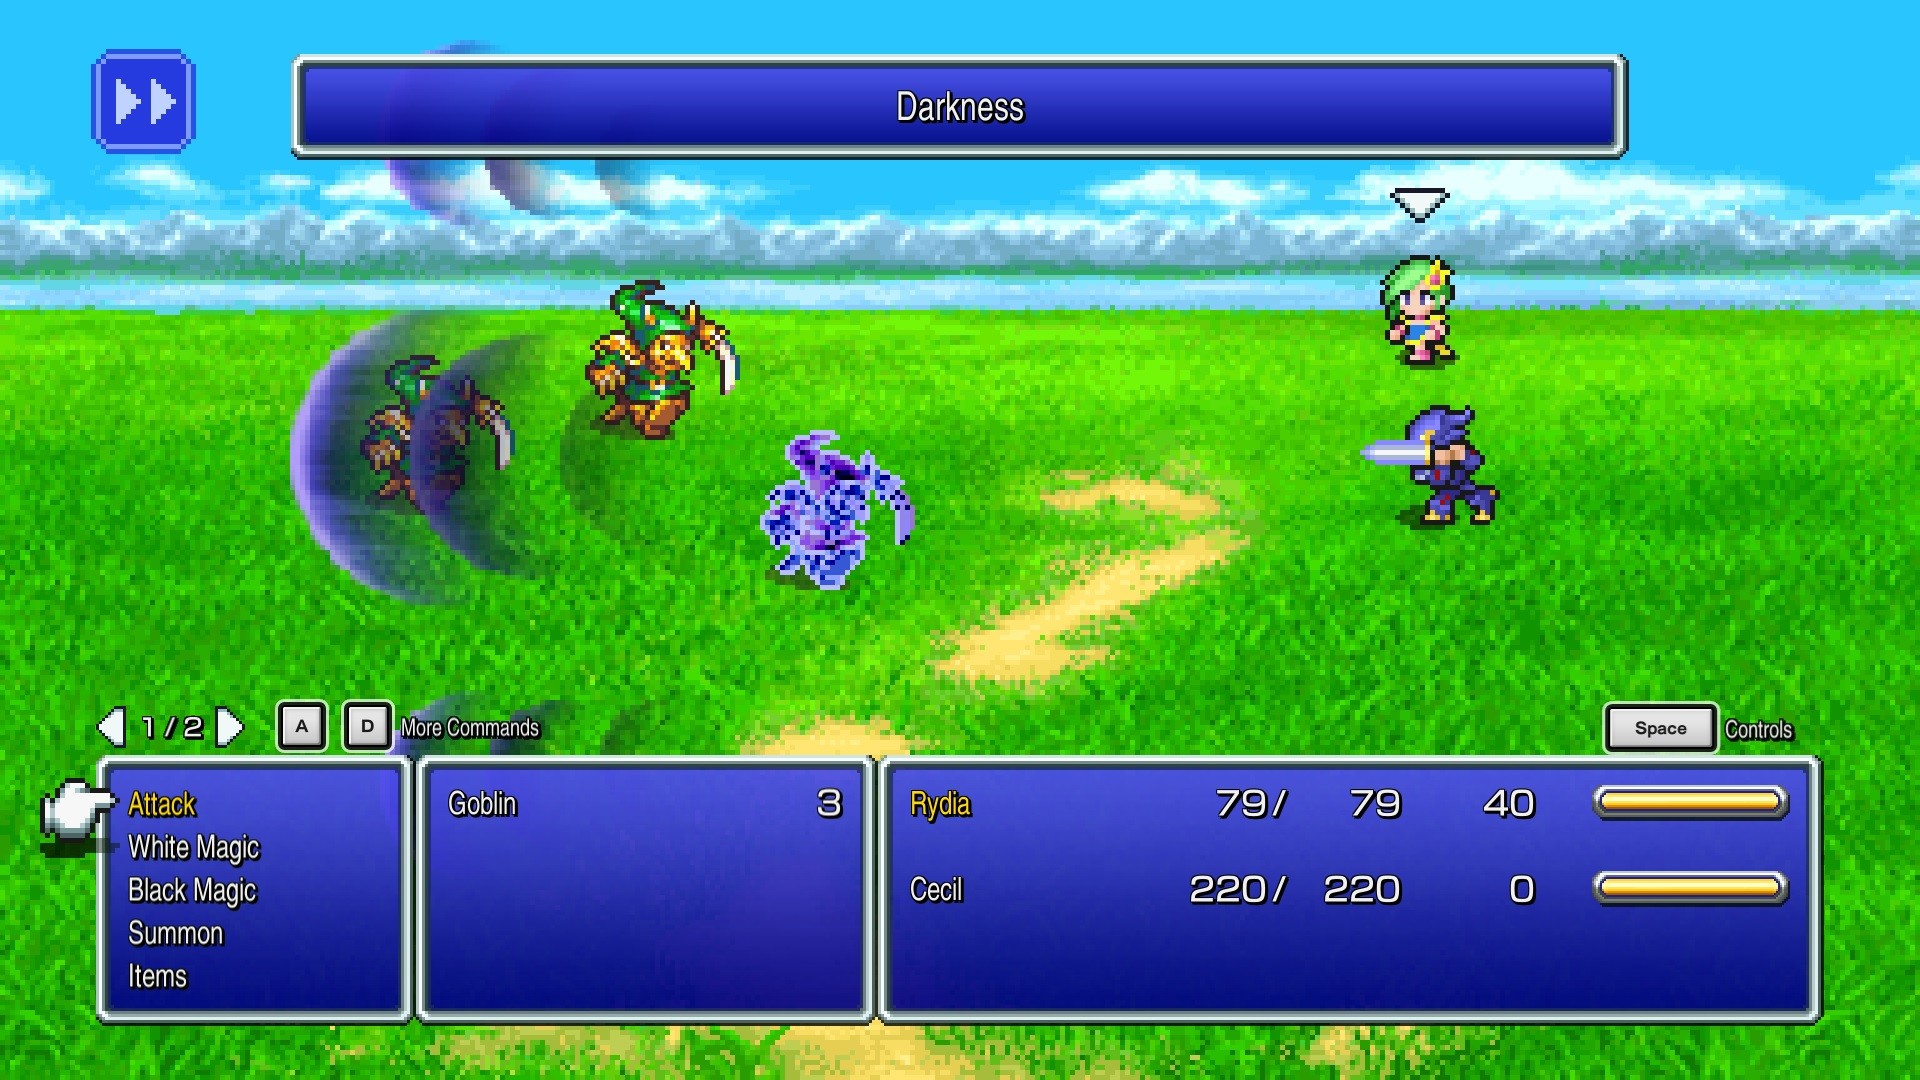 Review: Final Fantasy IV Pixel Remaster Carefully Enhances a Classic